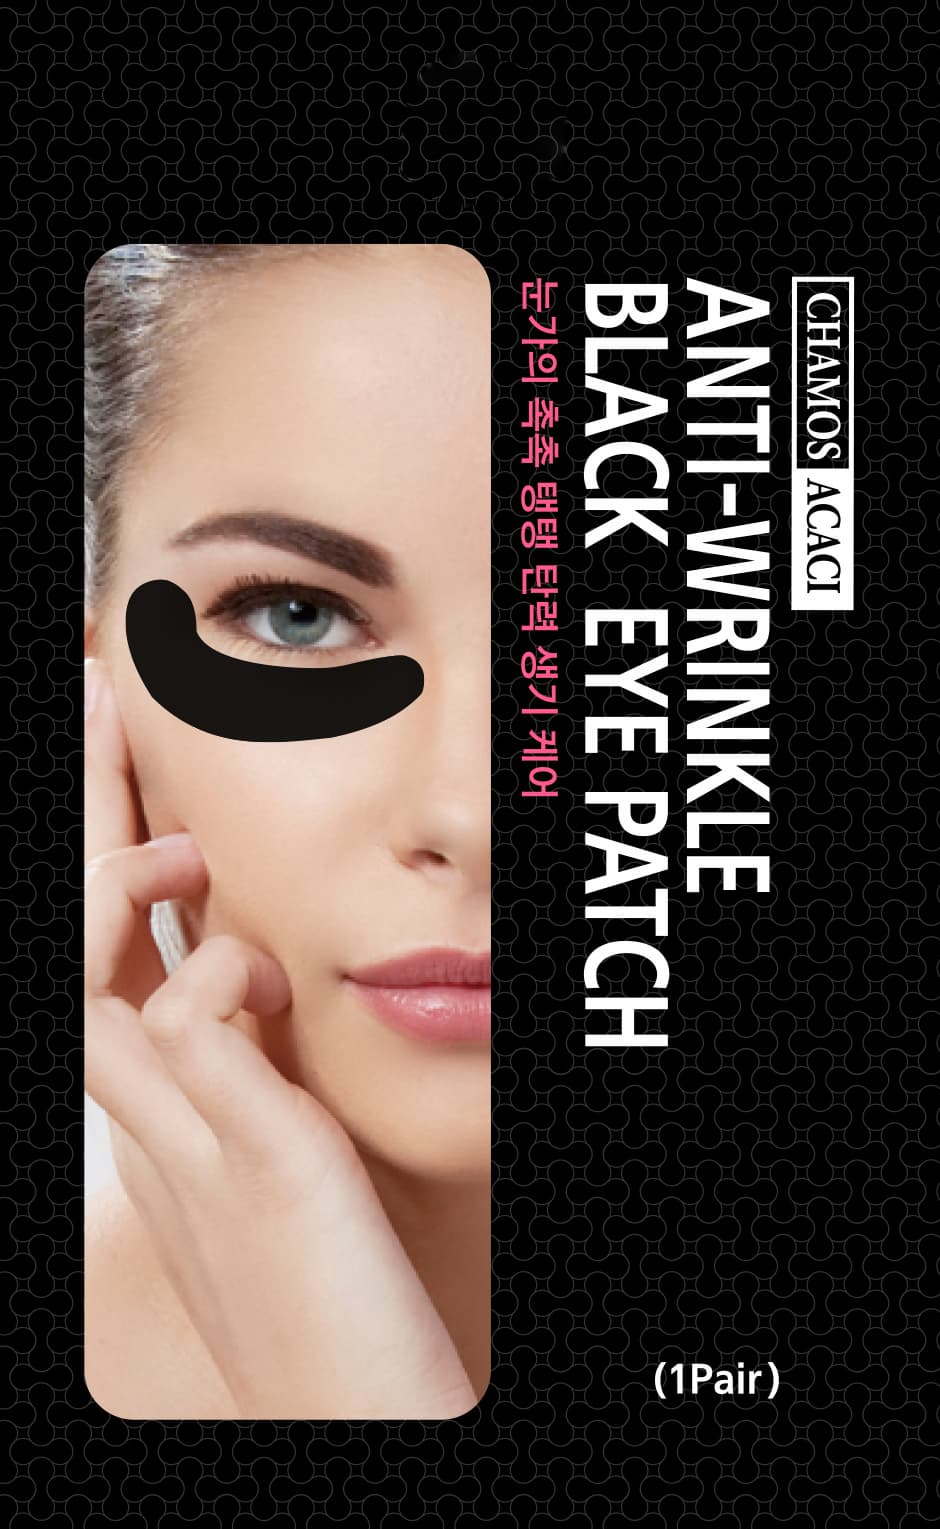 chamos acaci Anti_Wrinkle Black Eye Patch